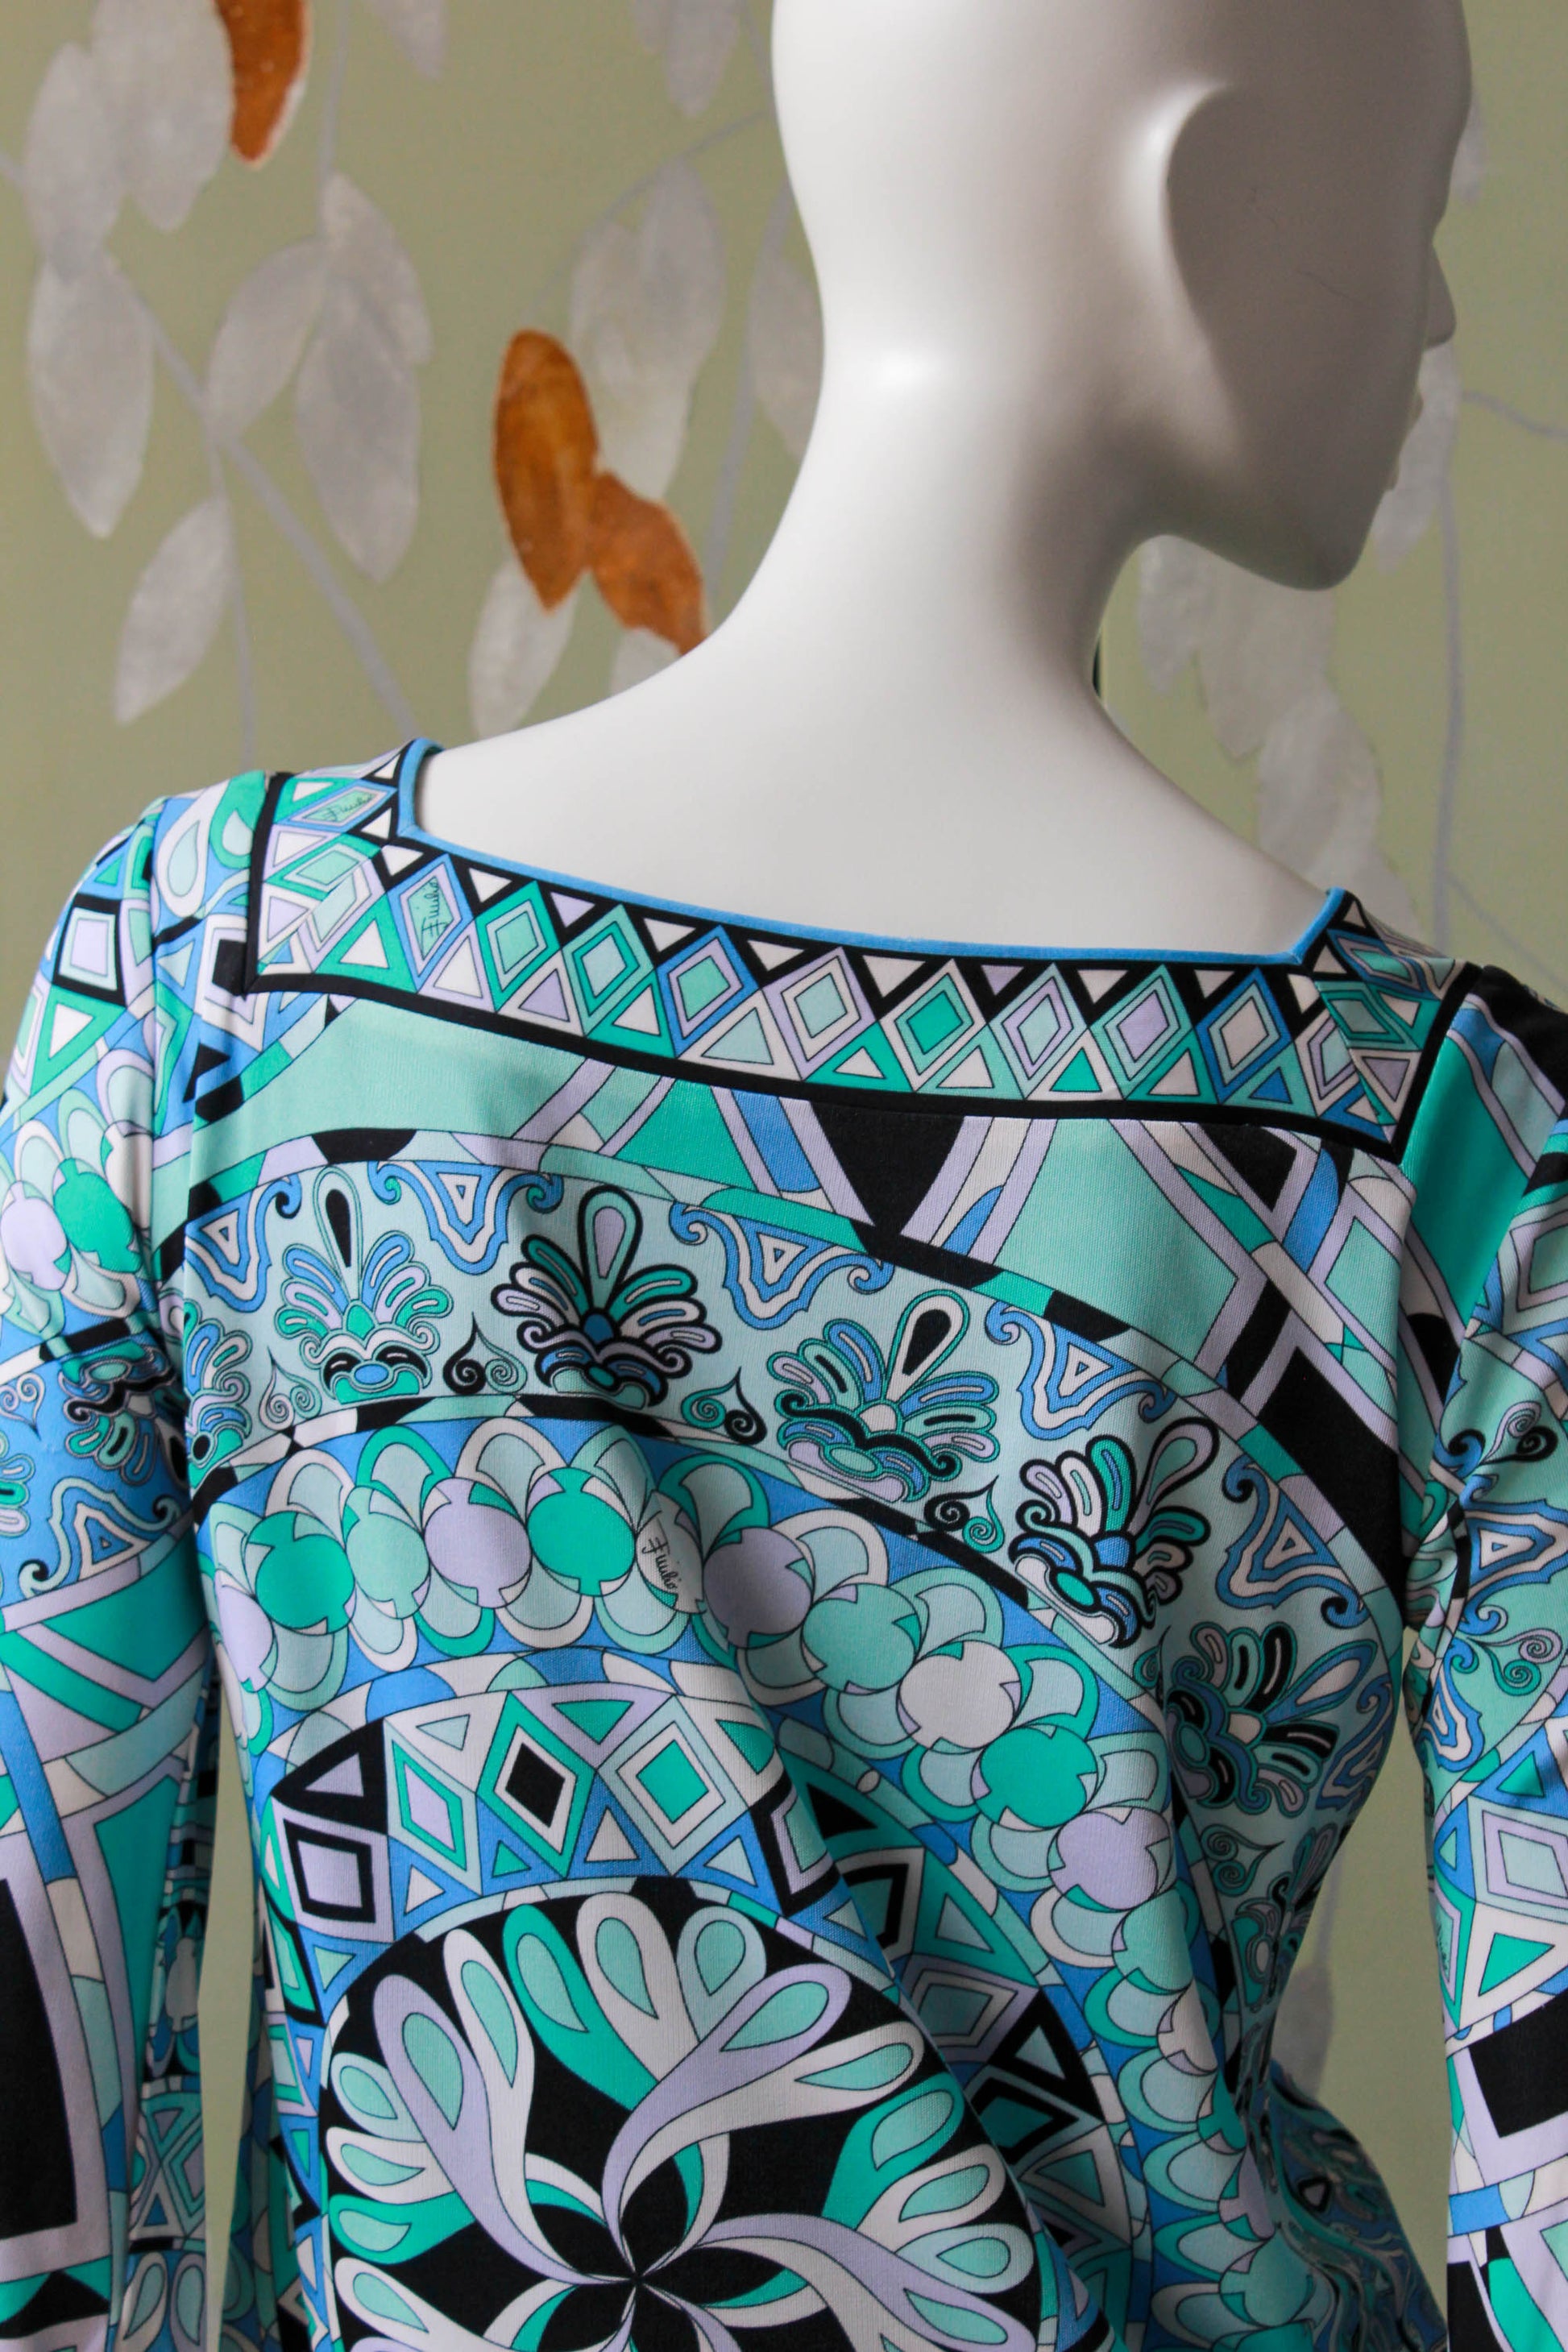 Ian Drummond Vintage 1960s Emilio Pucci Silk Patterned Dress, Medium